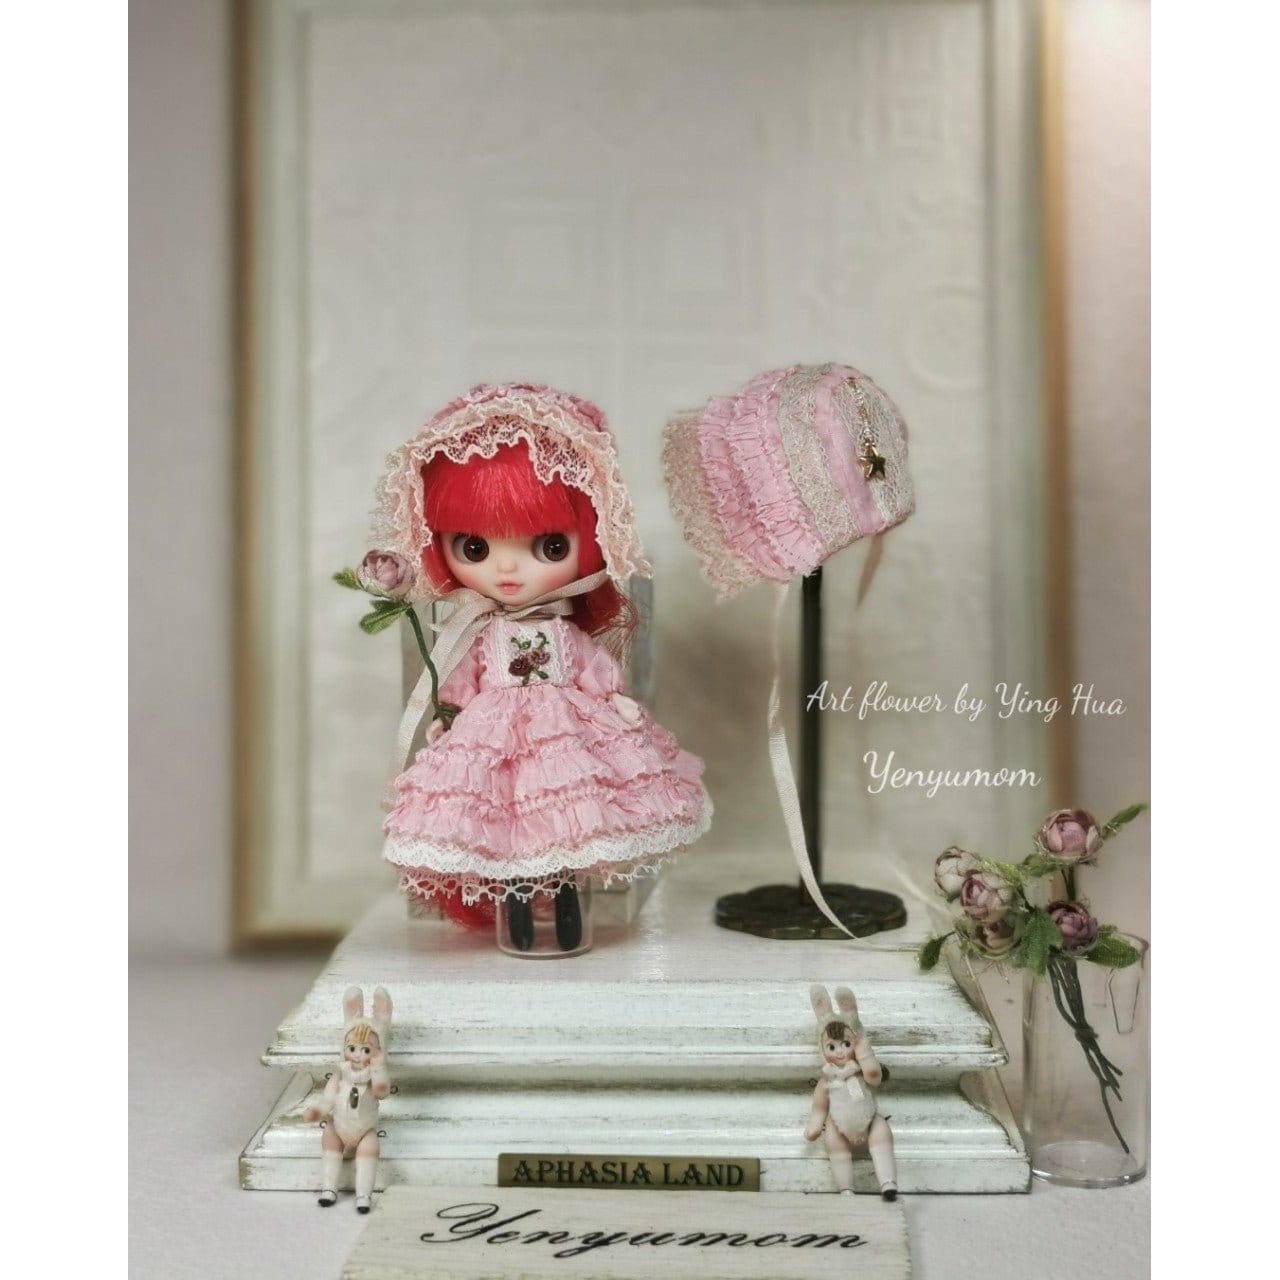 【Yenyumom】Pink Lace Dress Set / Petite Blythe